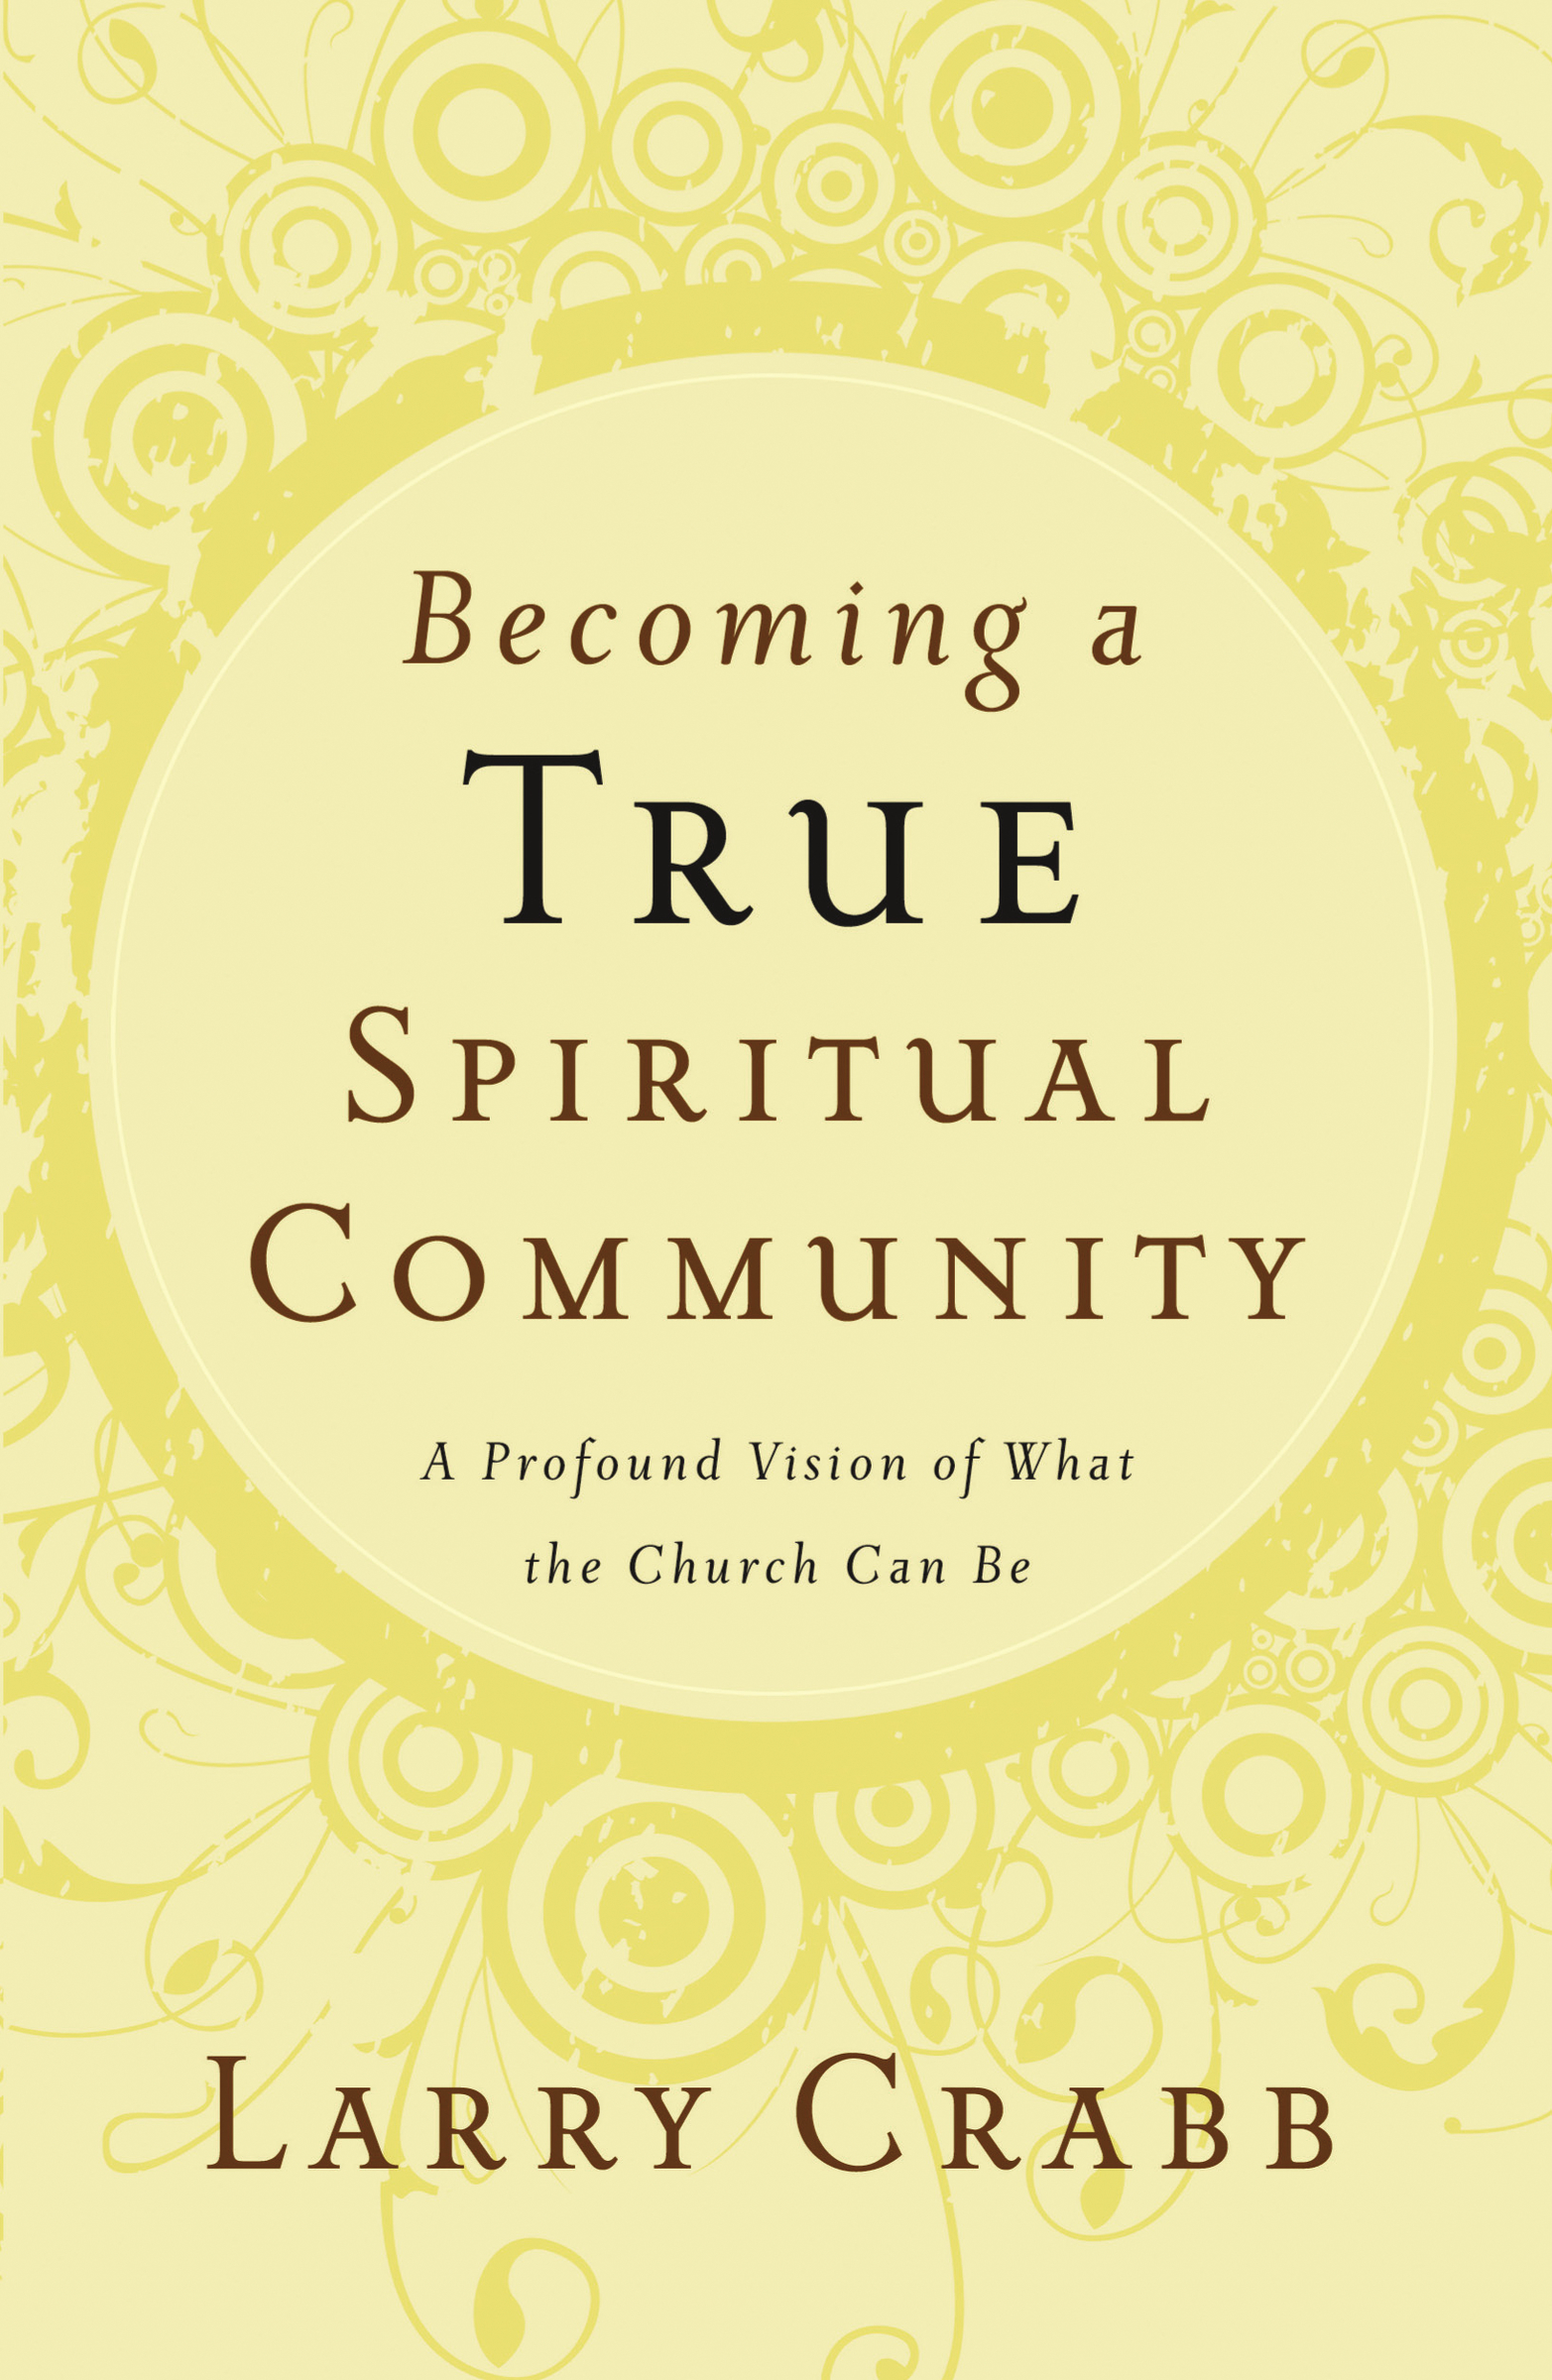 Becoming a true spiritual community cover image